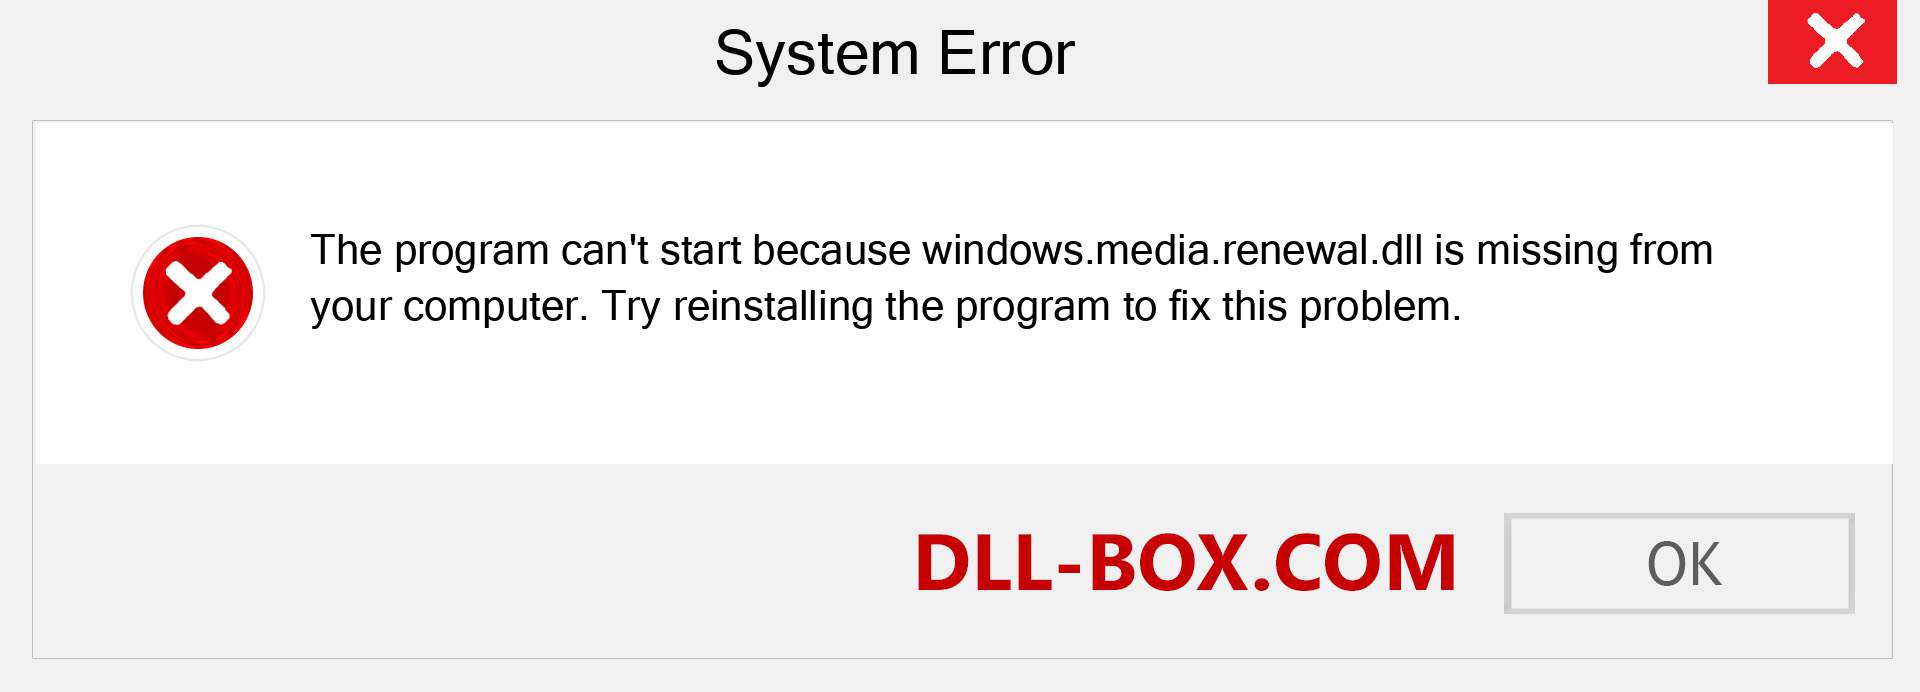  windows.media.renewal.dll file is missing?. Download for Windows 7, 8, 10 - Fix  windows.media.renewal dll Missing Error on Windows, photos, images